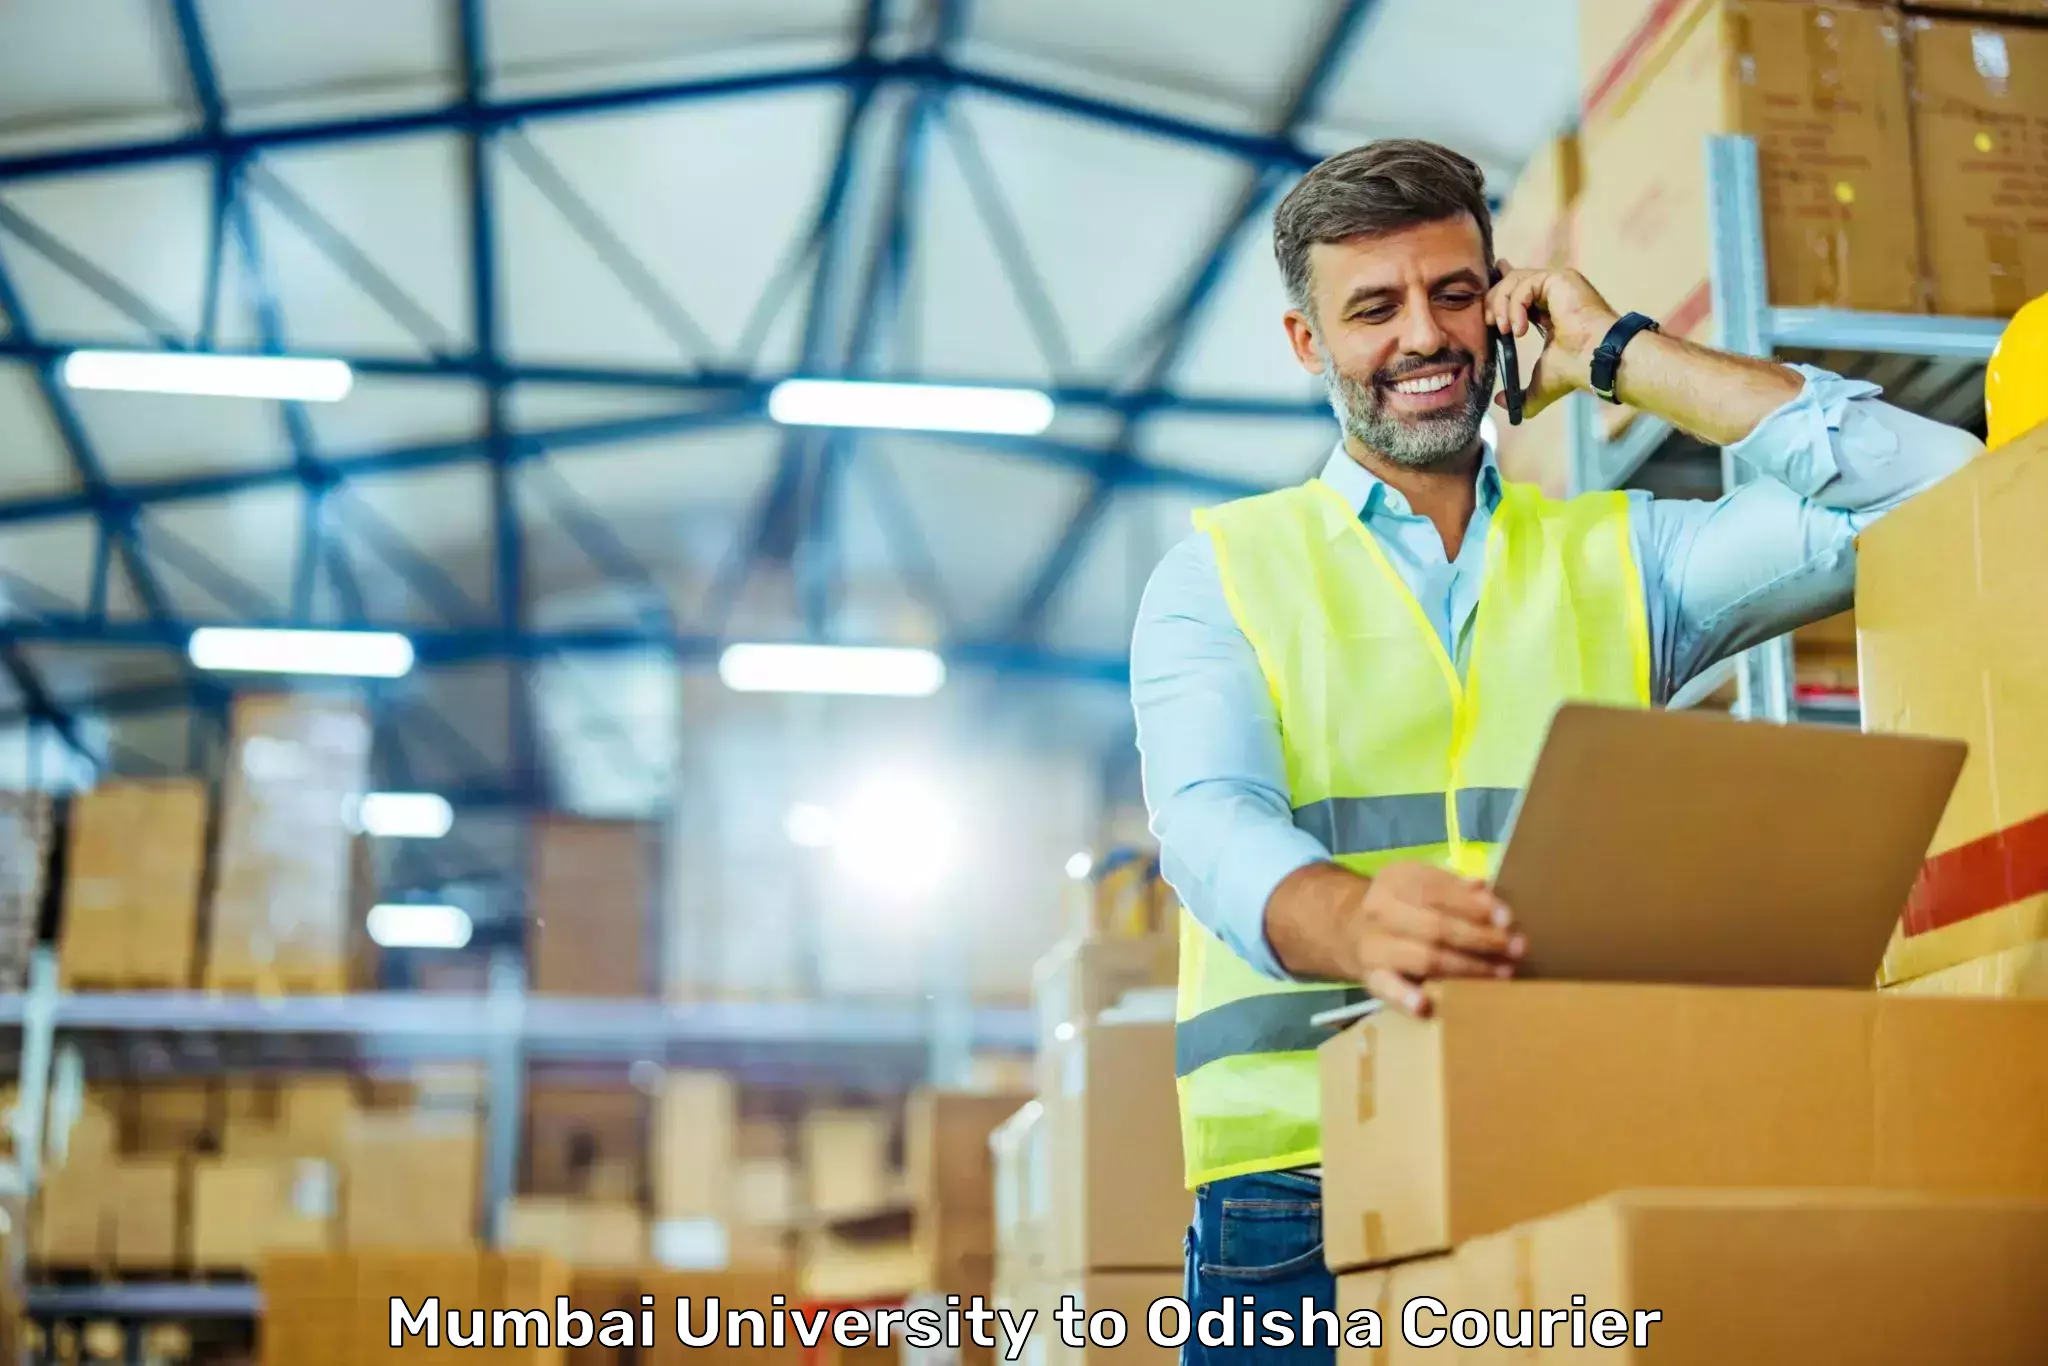 Professional courier services Mumbai University to Subdega